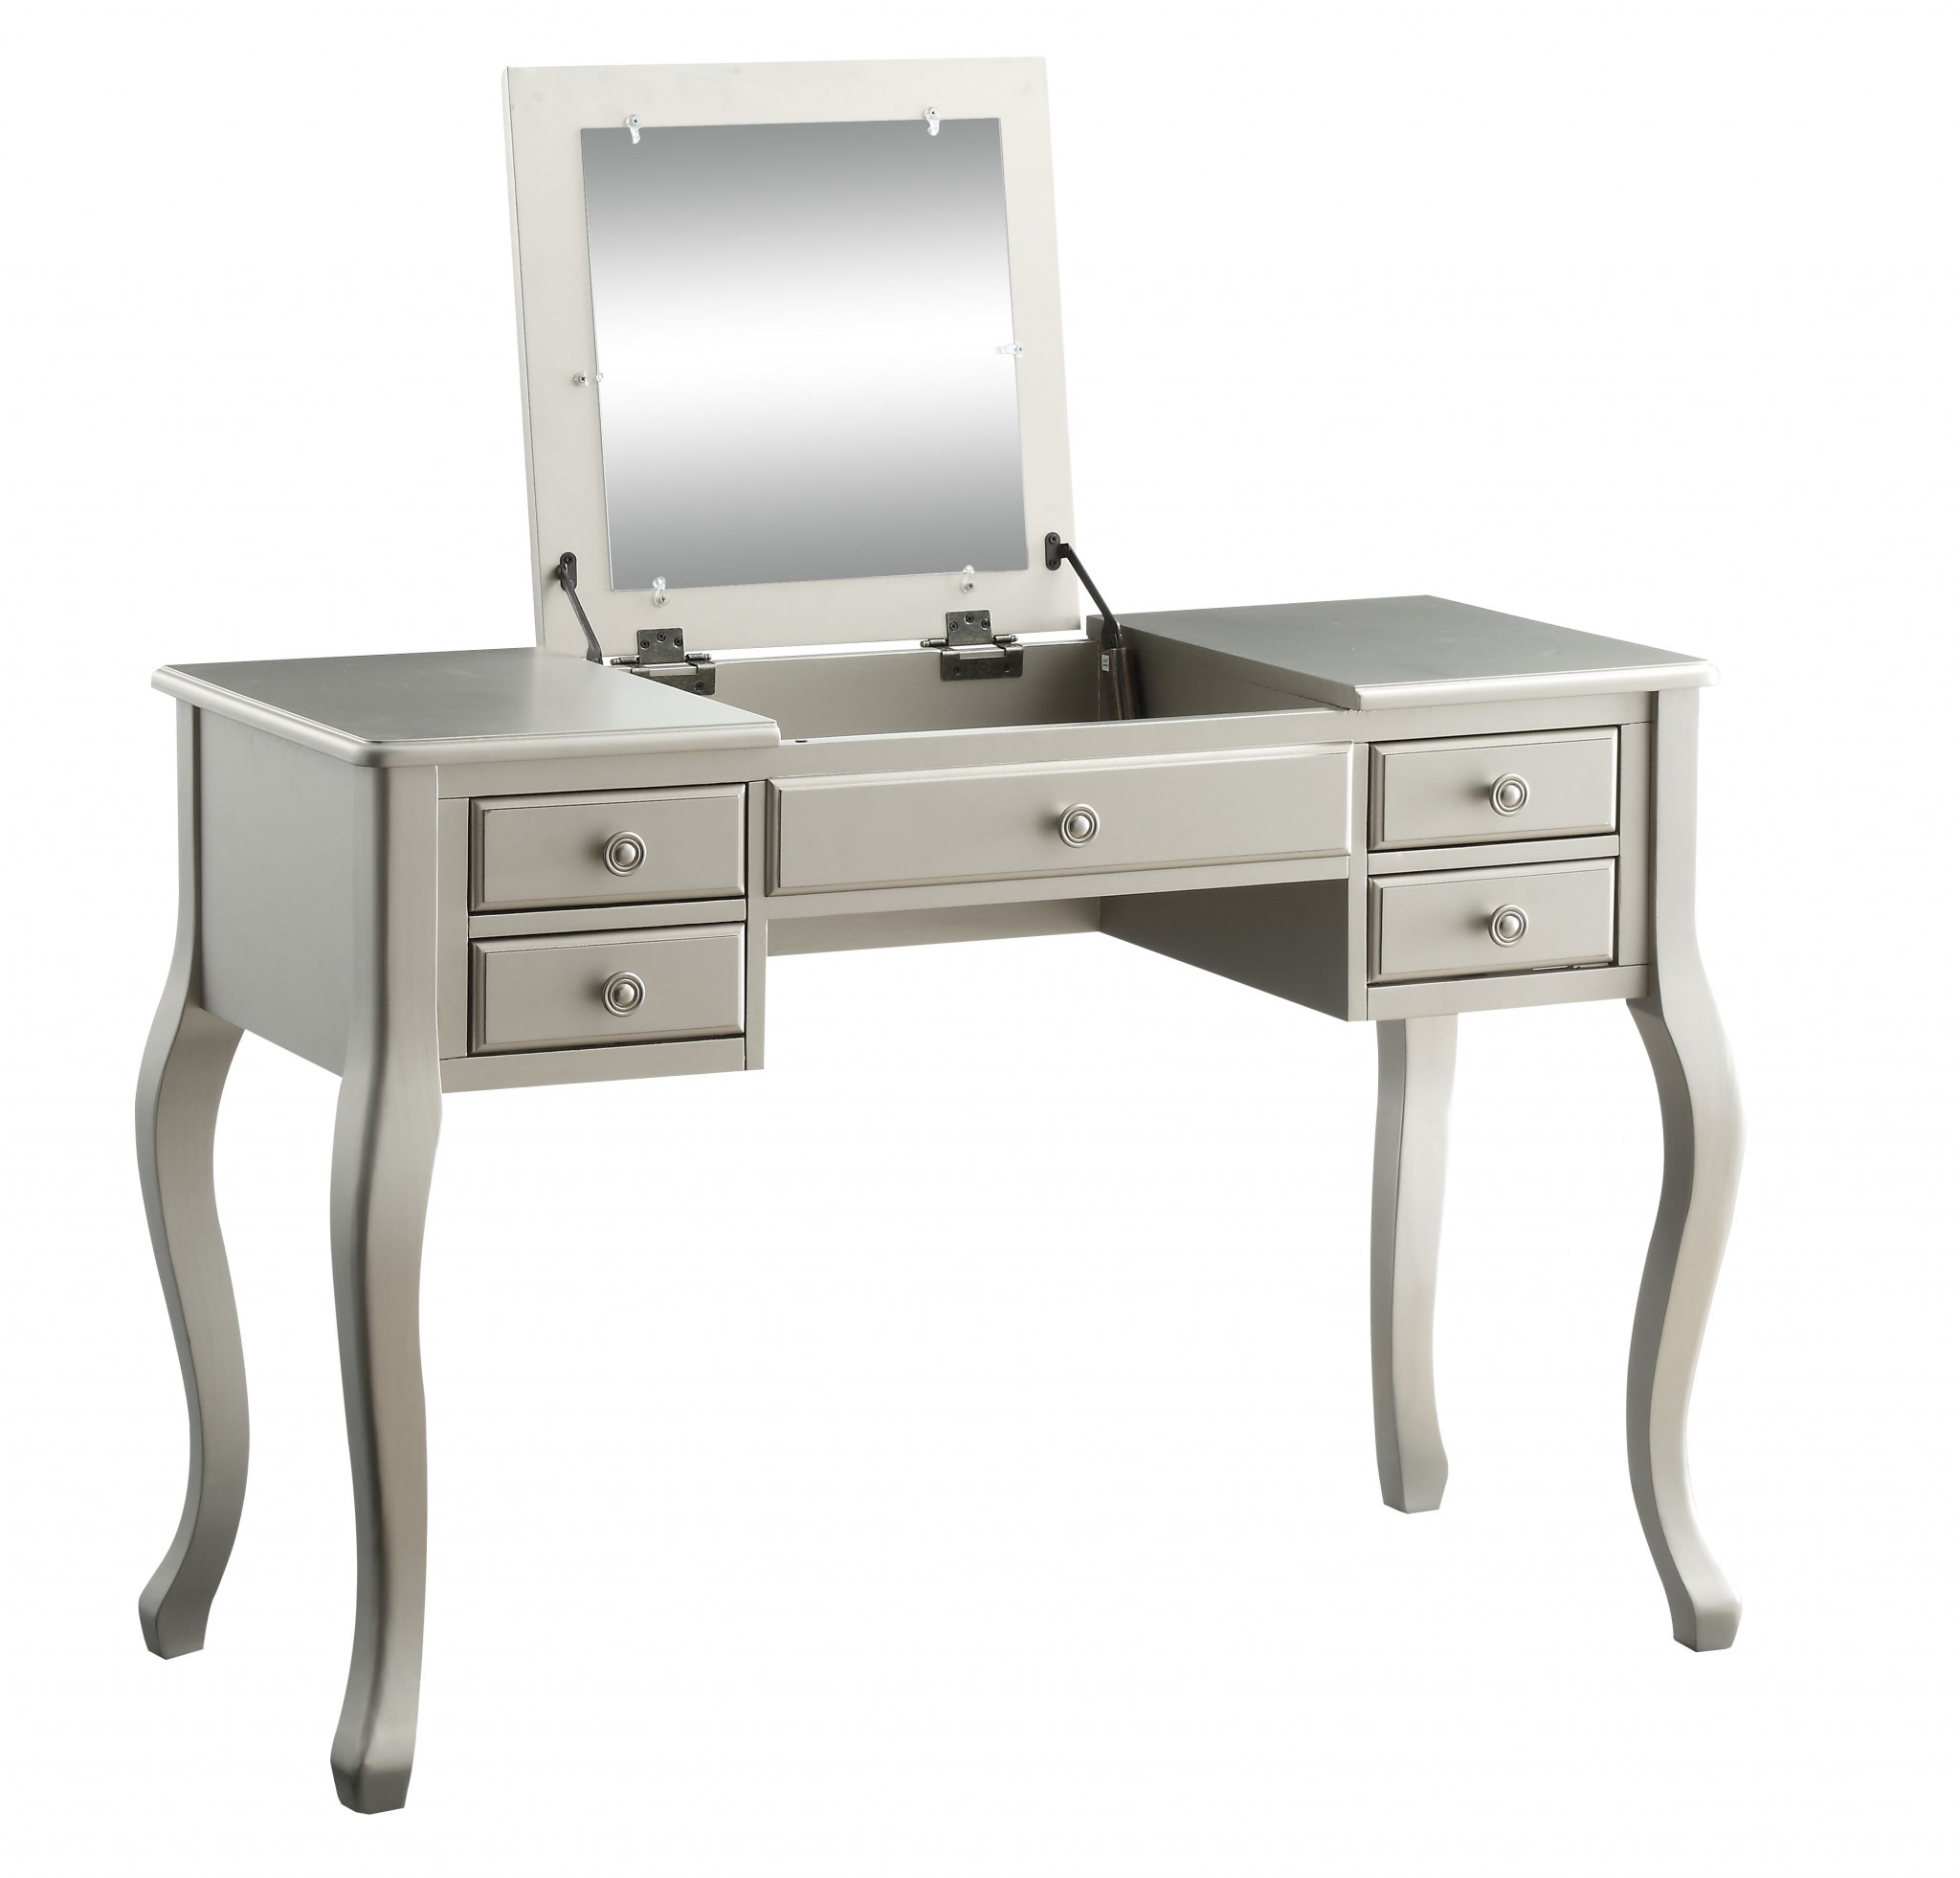 18" X 43" X 47" PU Silver Wood Mirror Upholstered (Seat) Vanity Set